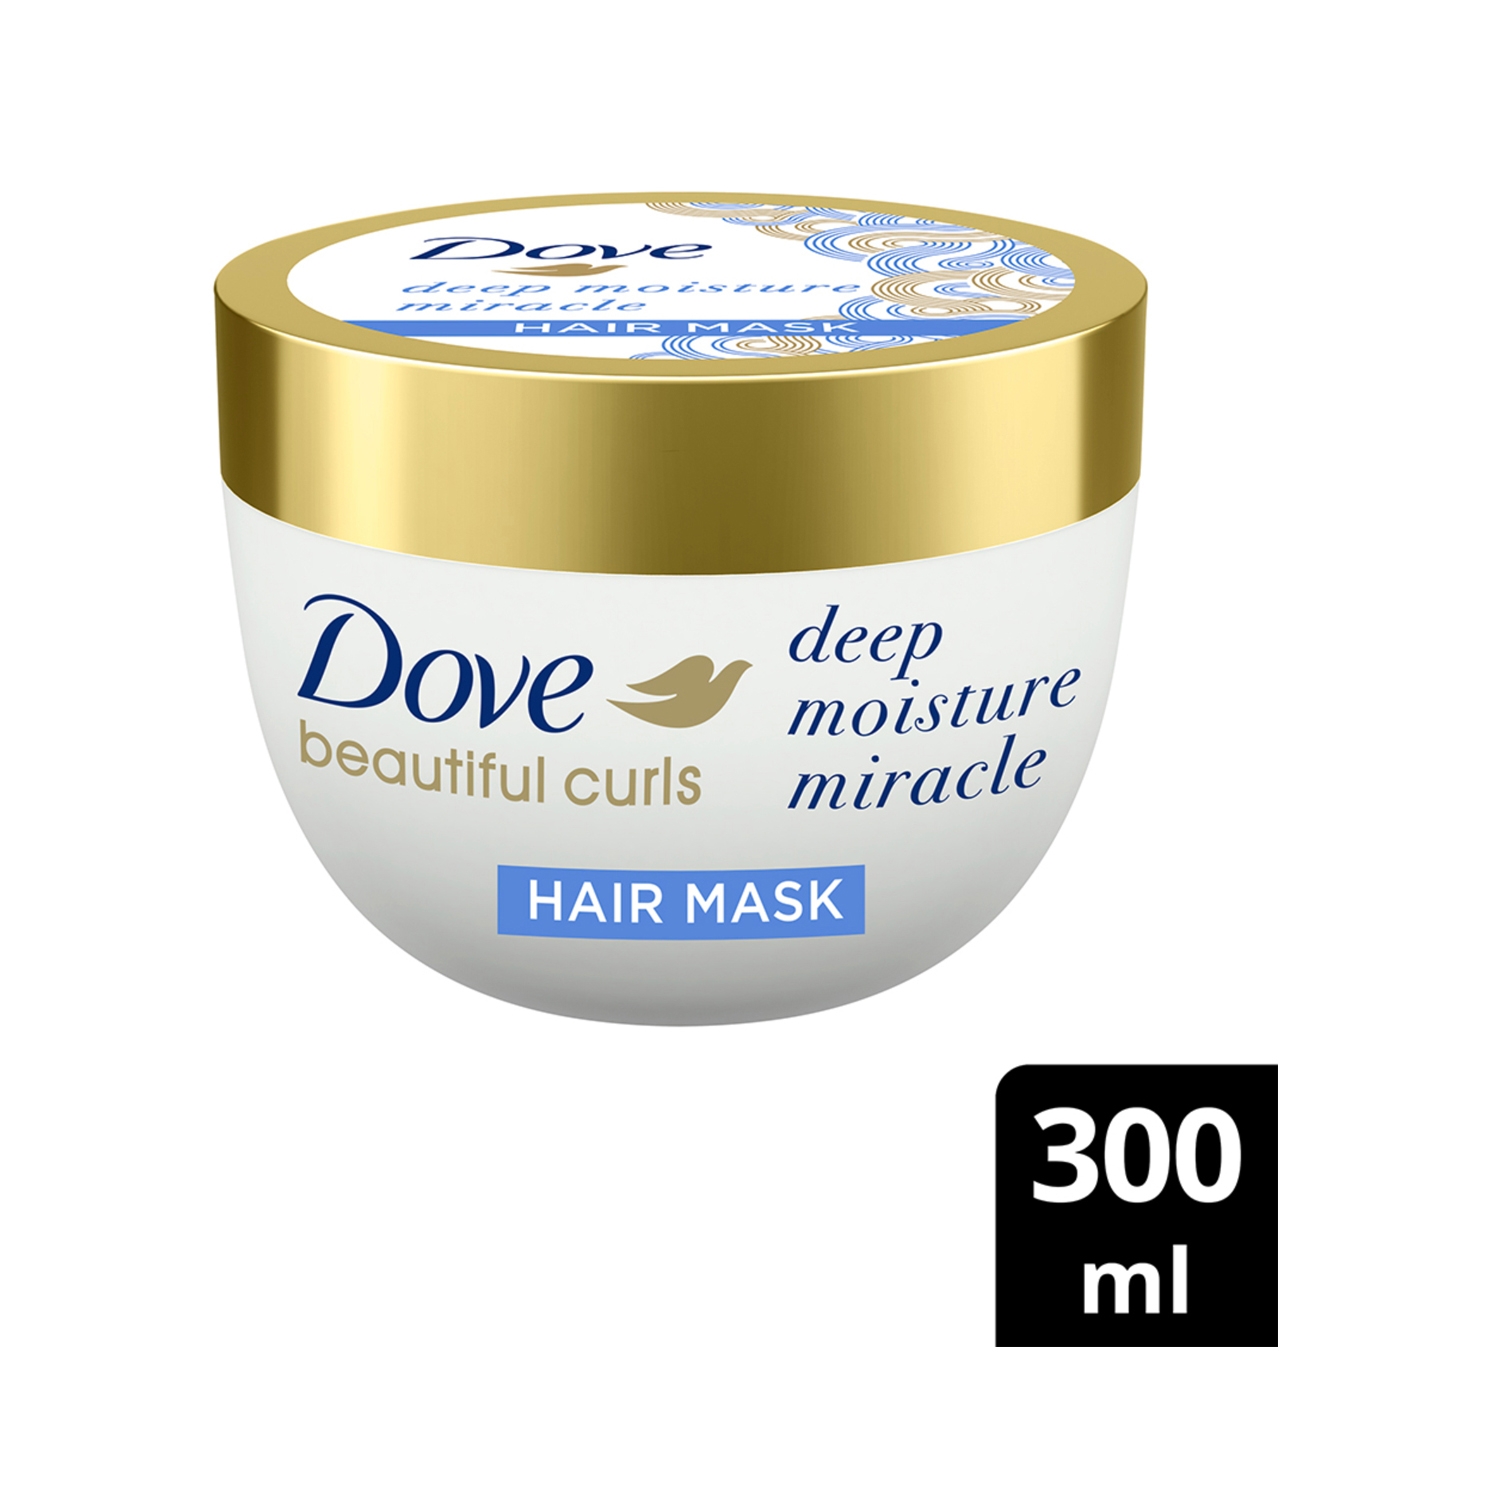 Dove | Dove Beautiful Curls Deep Moisture Miracle Hair Mask (300ml)